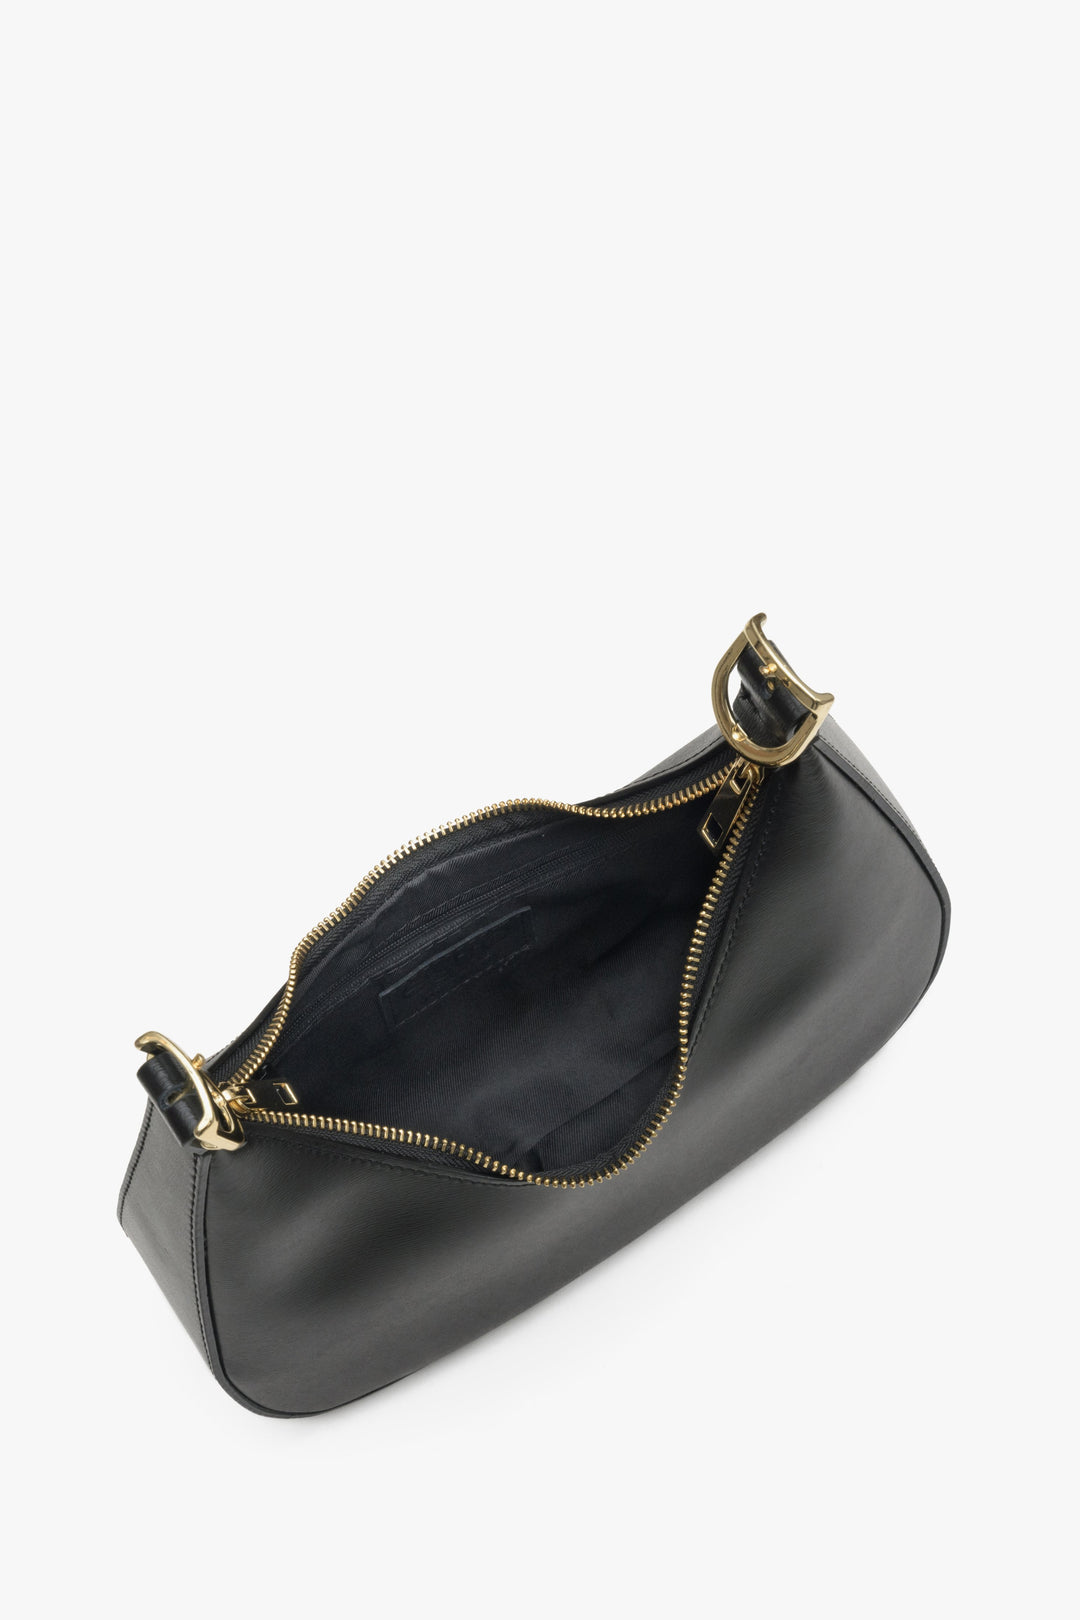 Women's black Estro handbag - close-up on the interior.